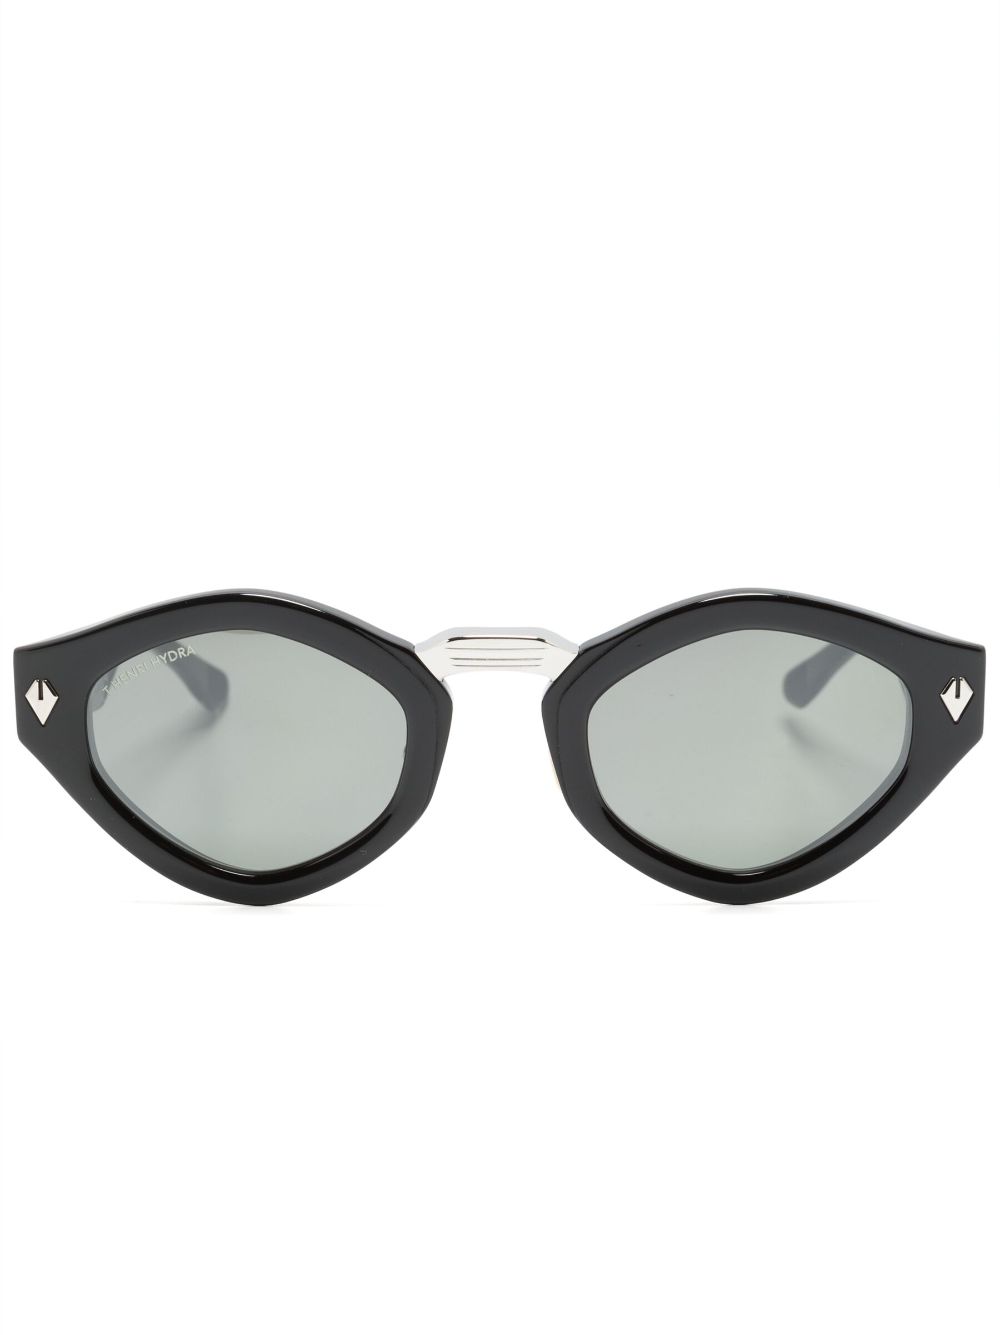 T Henri Eyewear tinted-lenses oval-frame sunglasses - Black von T Henri Eyewear